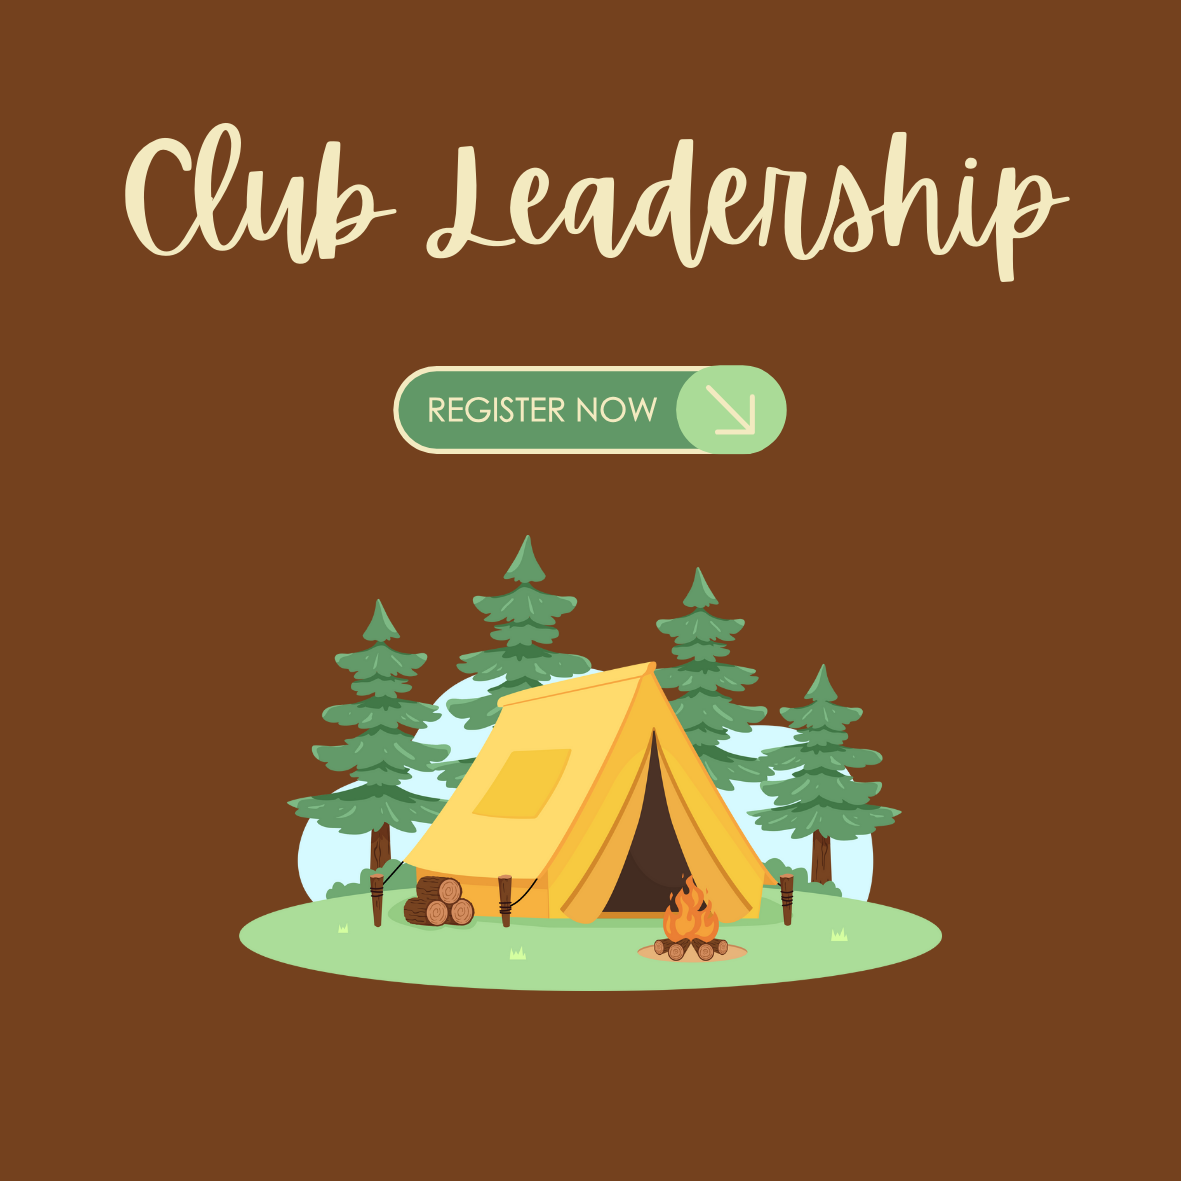 Leadership Register-button.png